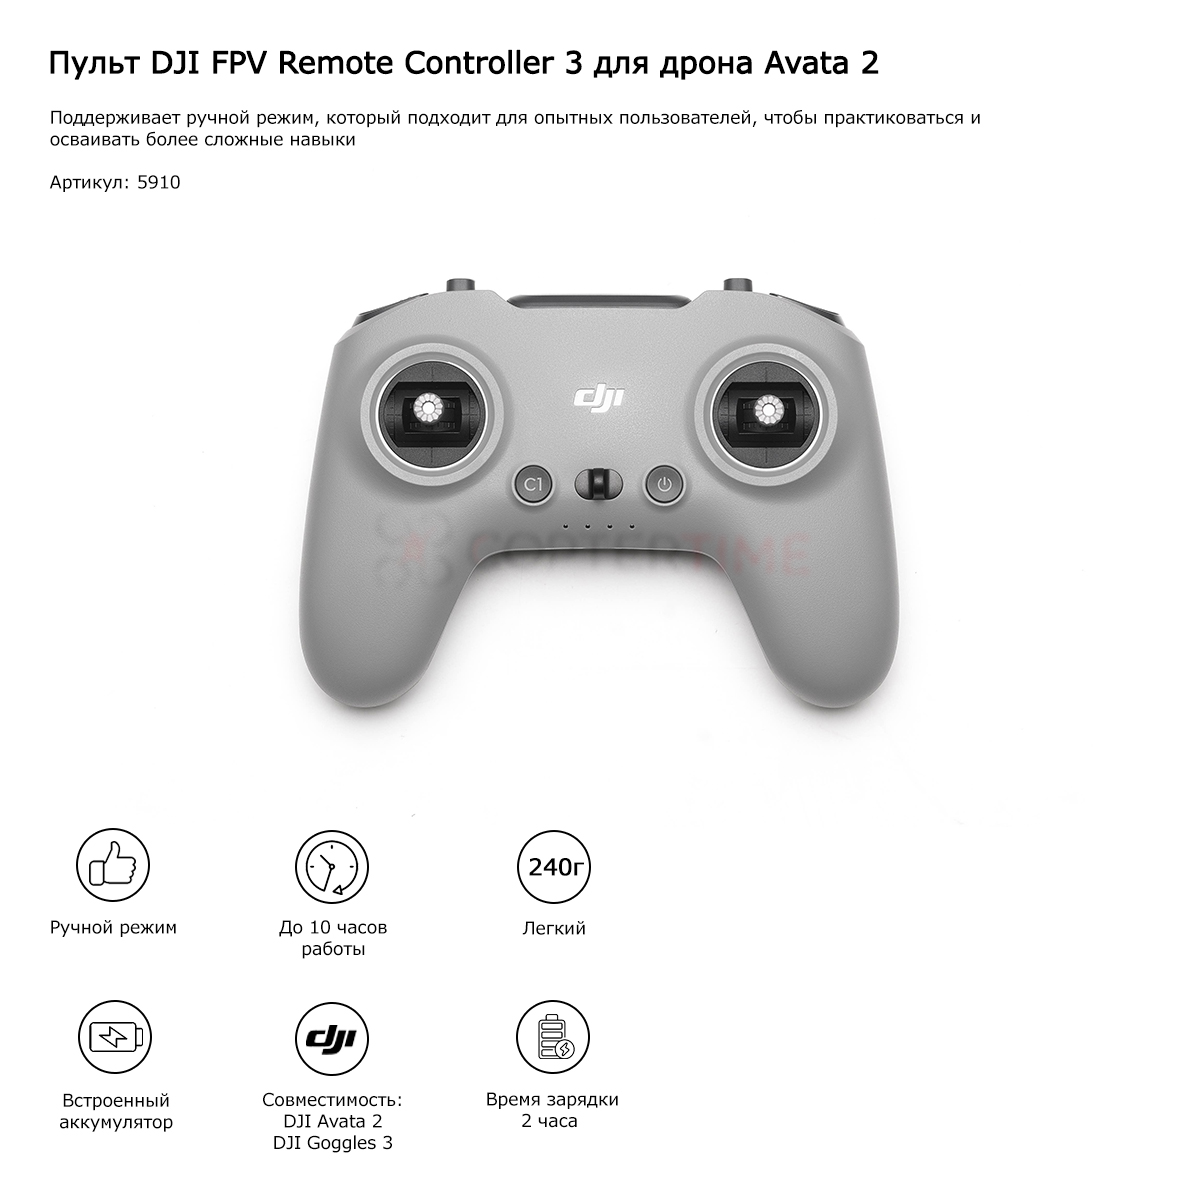 Пульт DJI FPV Remote Controller 3 для дрона Avata 2